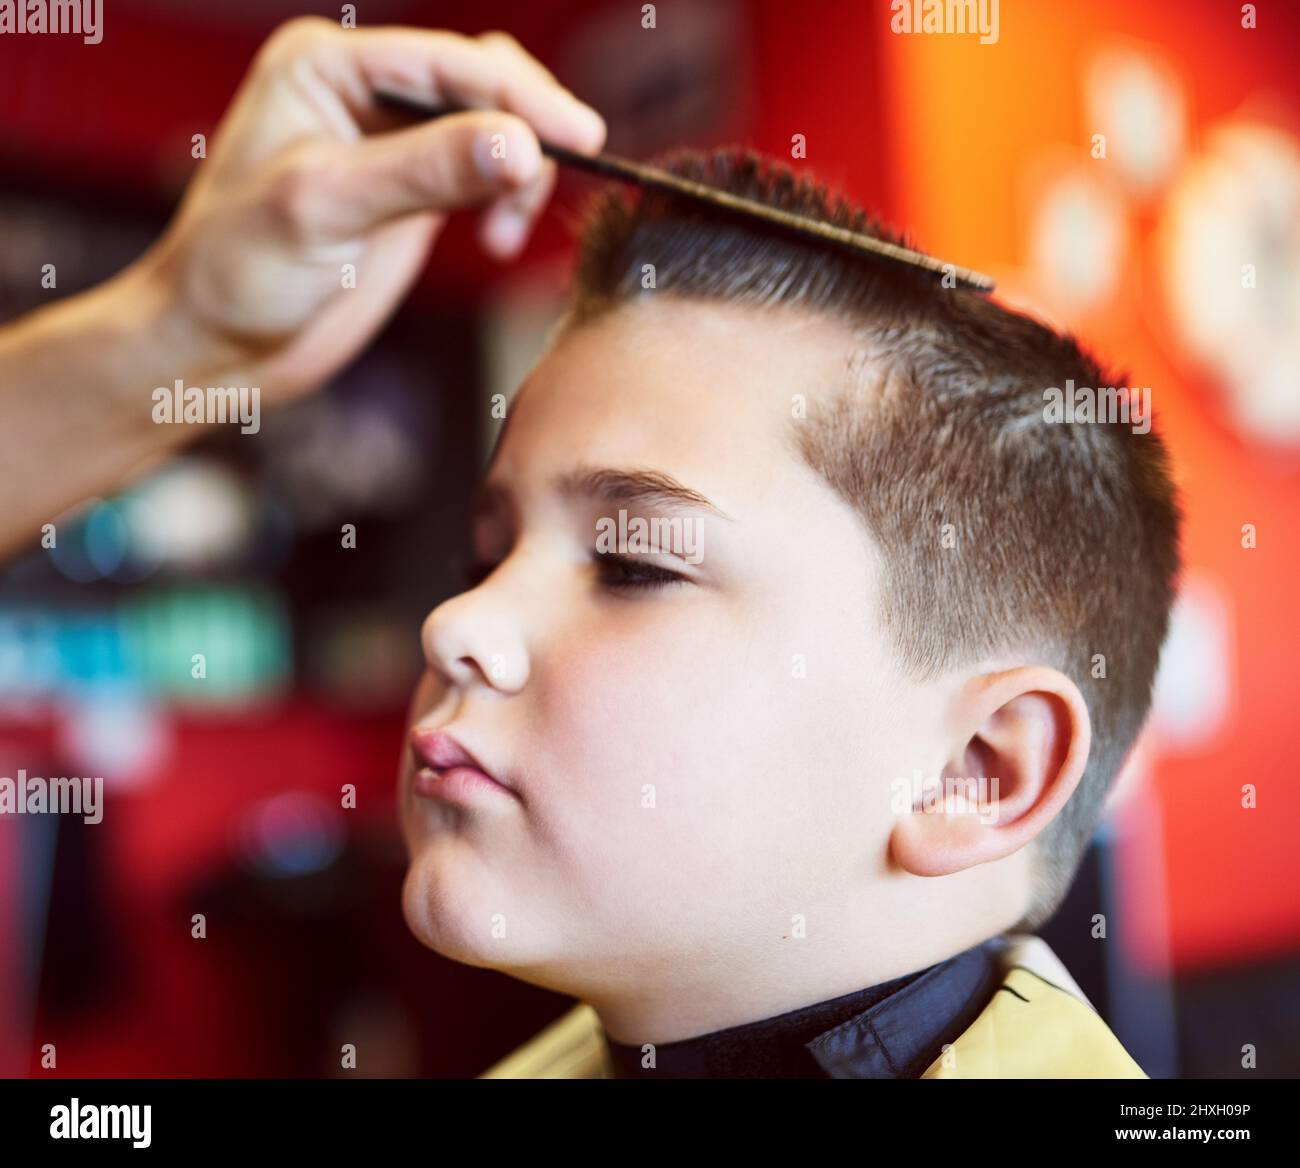 Looking good. Closeup shot of a young boy getting a haircut at a barber shop. Stock Photo